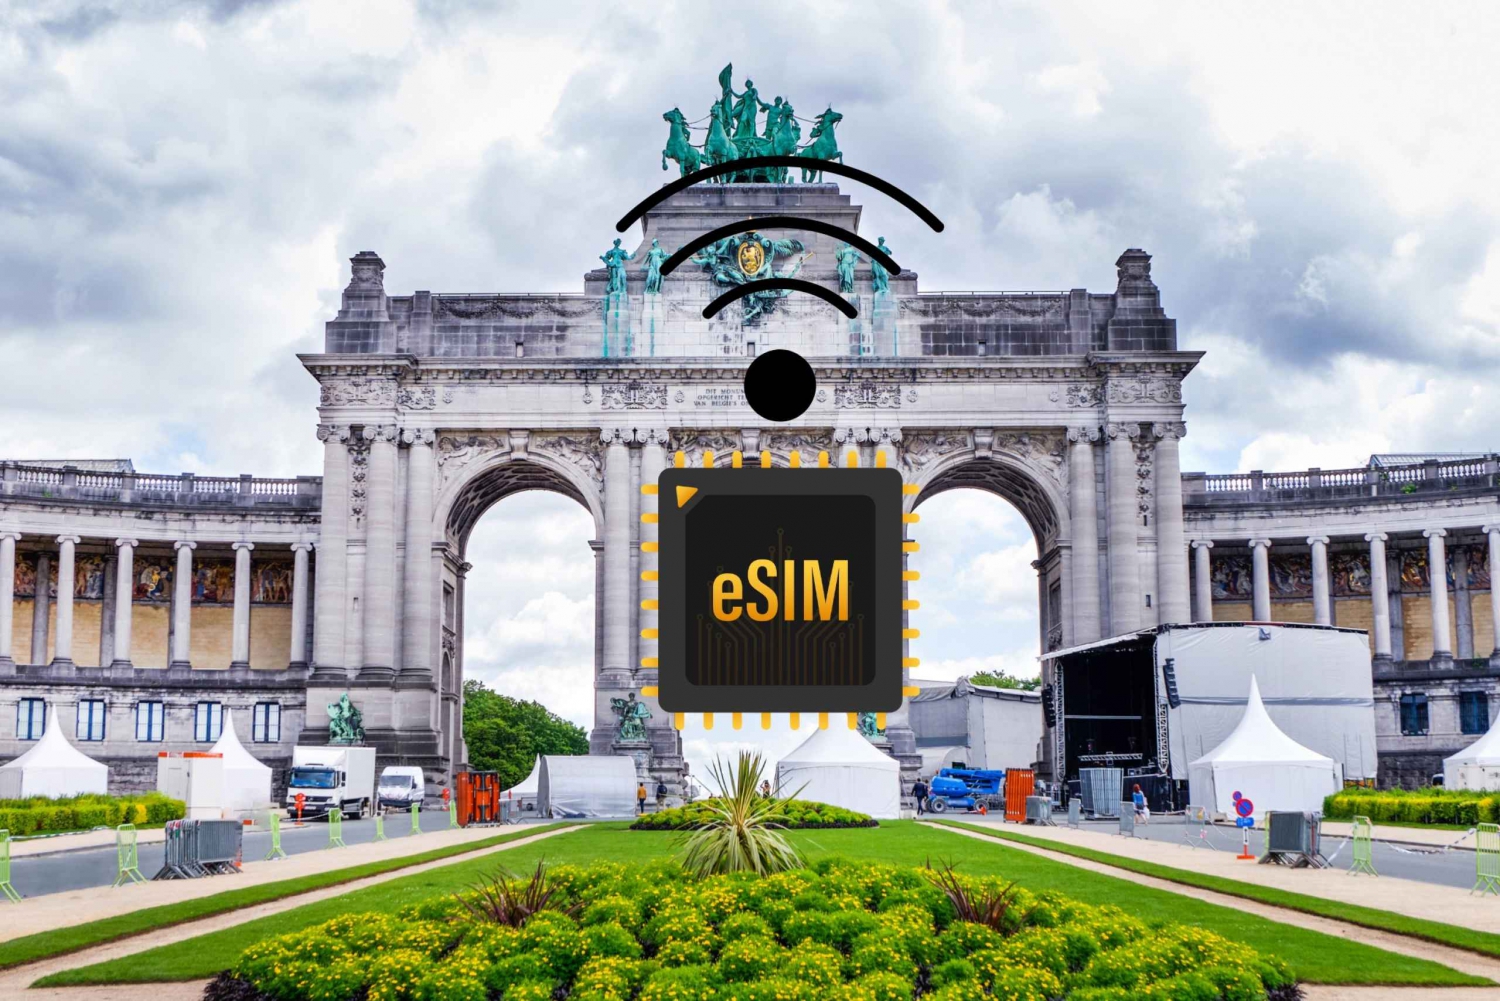 Bruselas : eSIM Internet Plan de Datos Bélgica alta velocidad 4G/5G